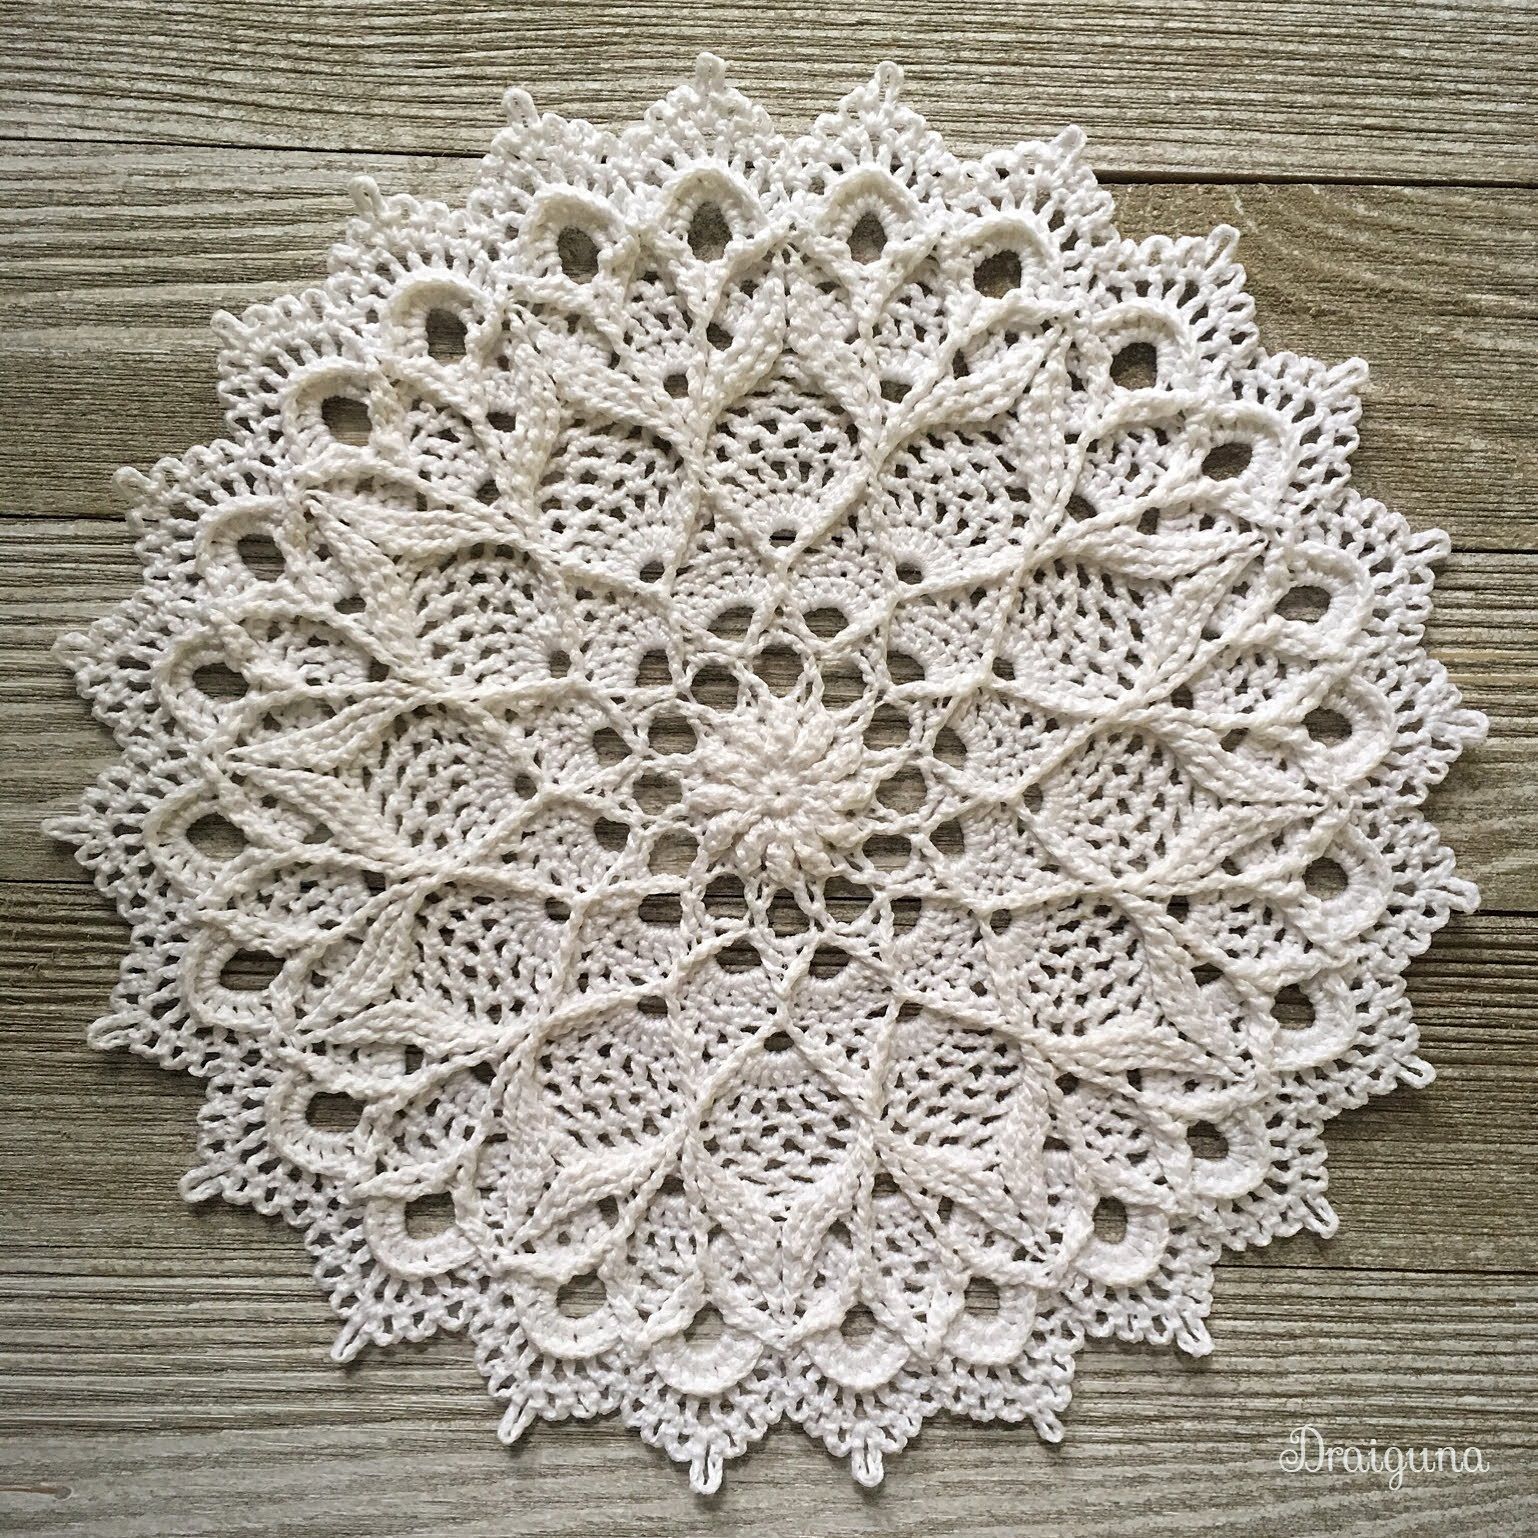 Ravelry: Leylight by Julia Hart | Free crochet doily patterns, Crochet